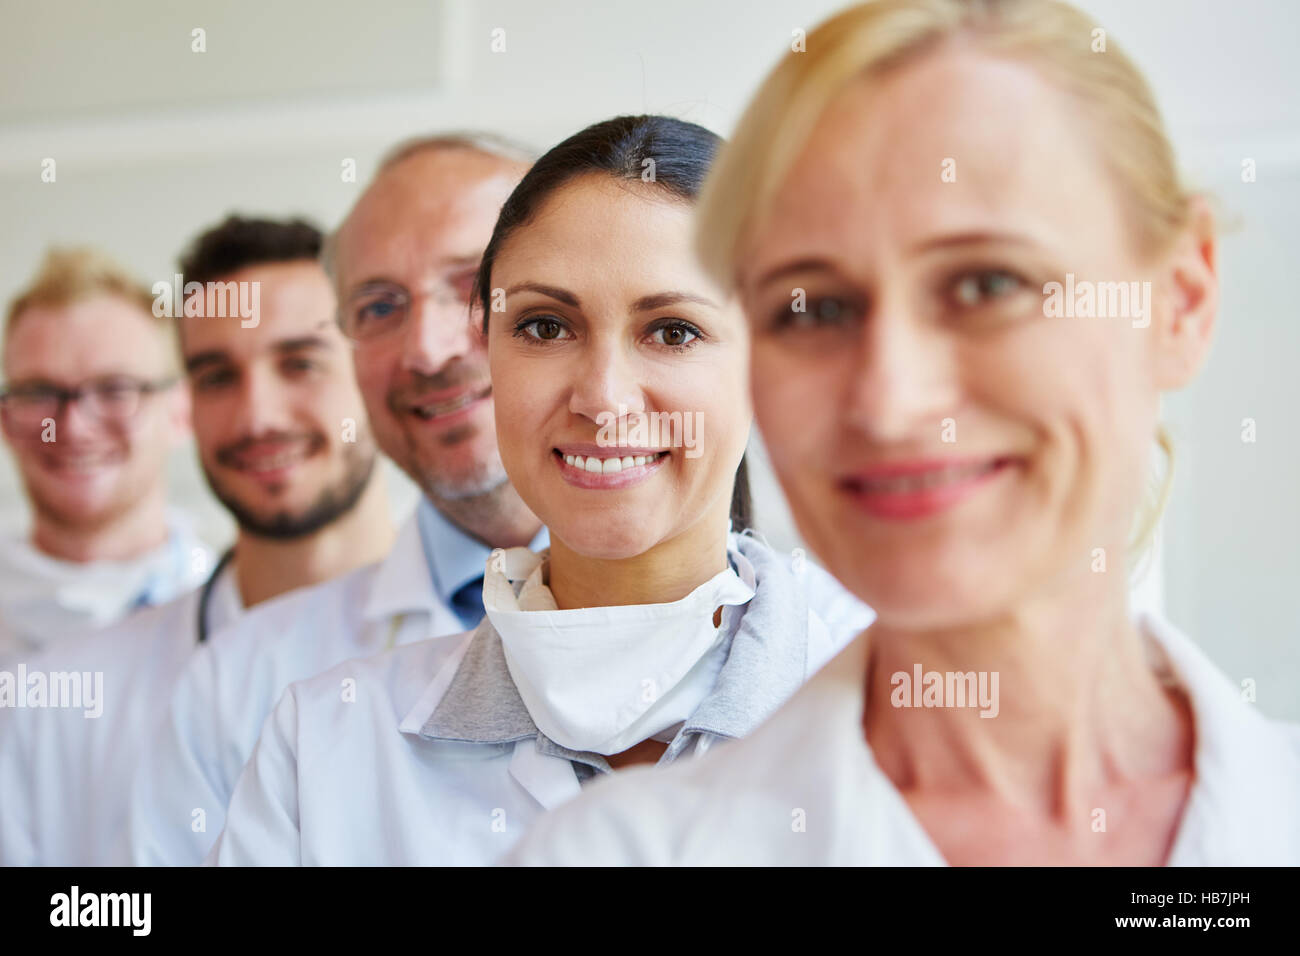 Doctors and nurses as successful MTA team Stock Photo